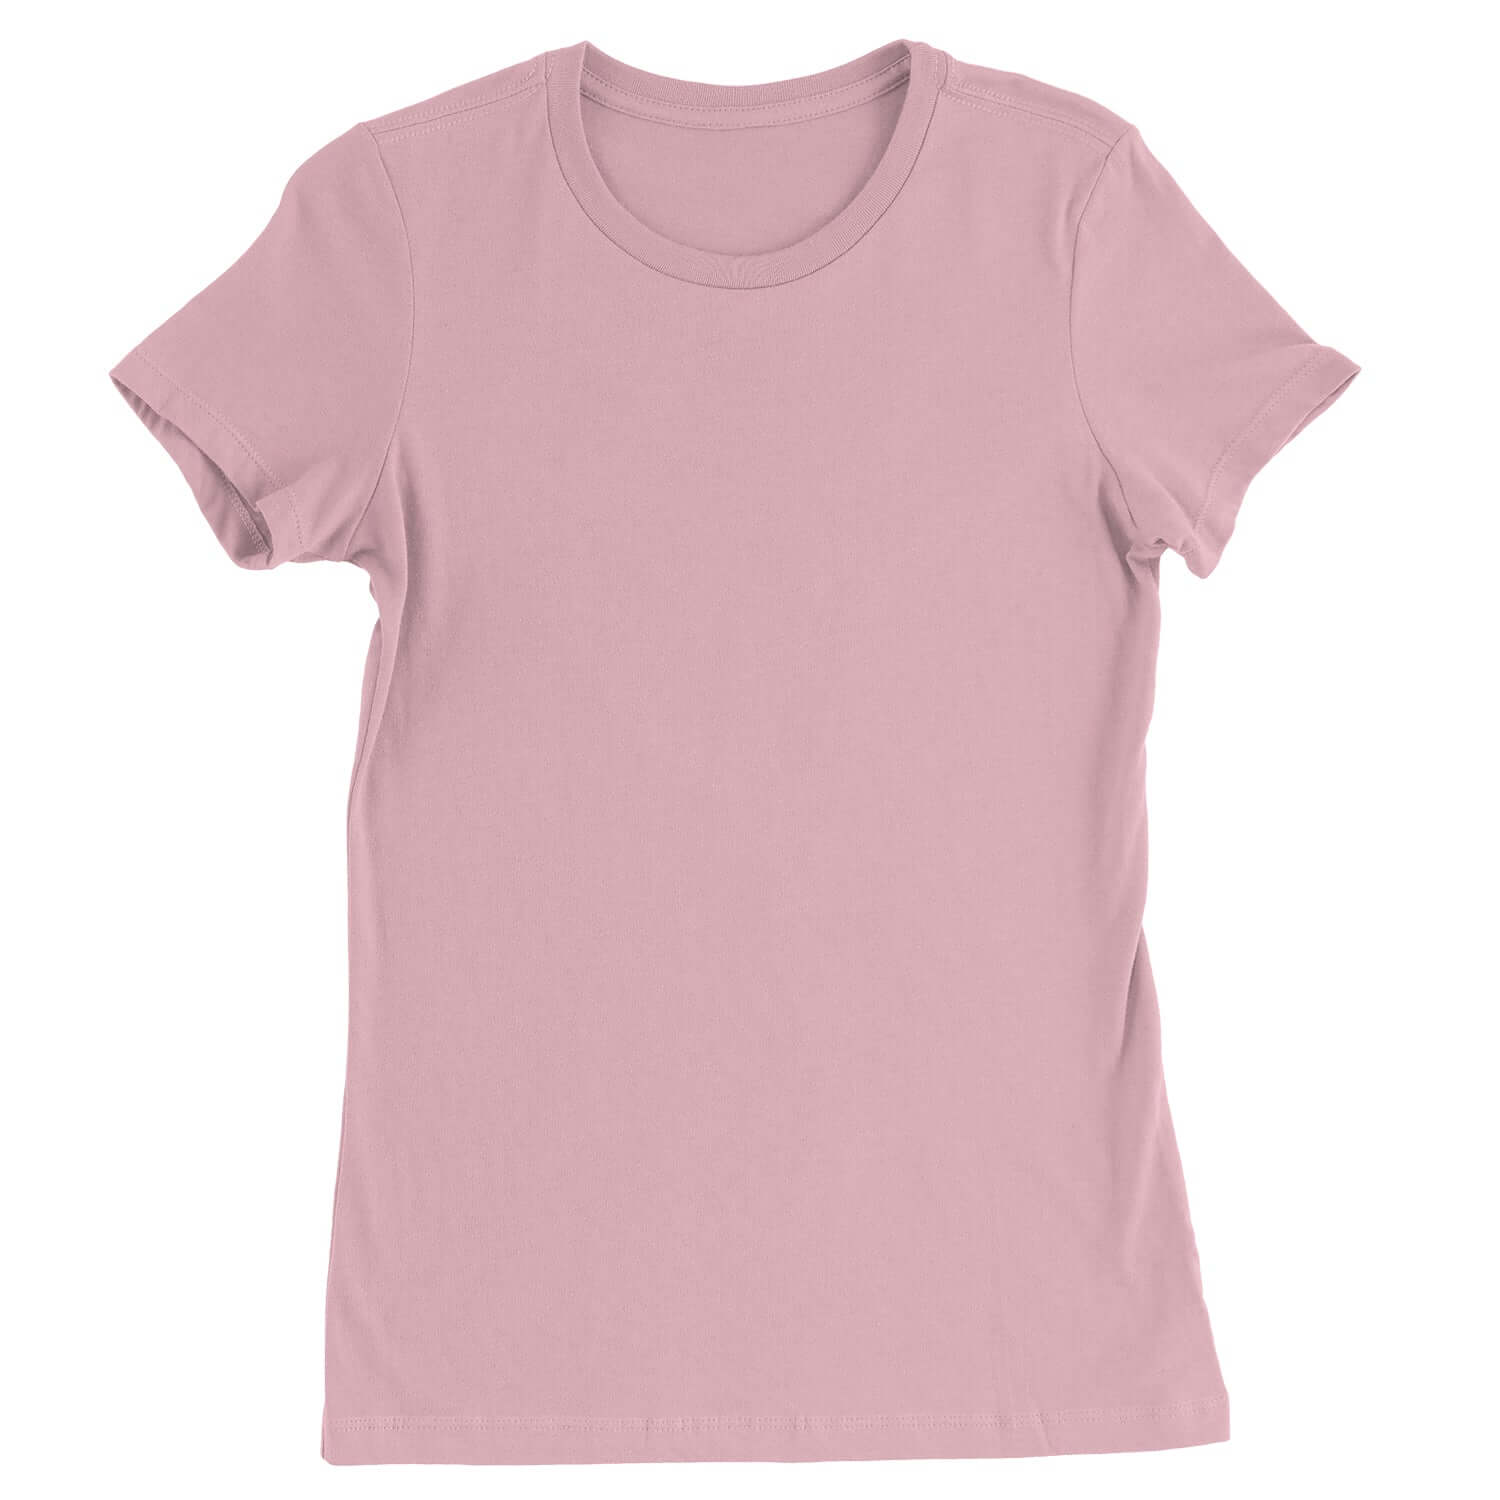 Basics - Plain Blank Womens T-shirt blank, clothing, plain, tshirts by Expression Tees